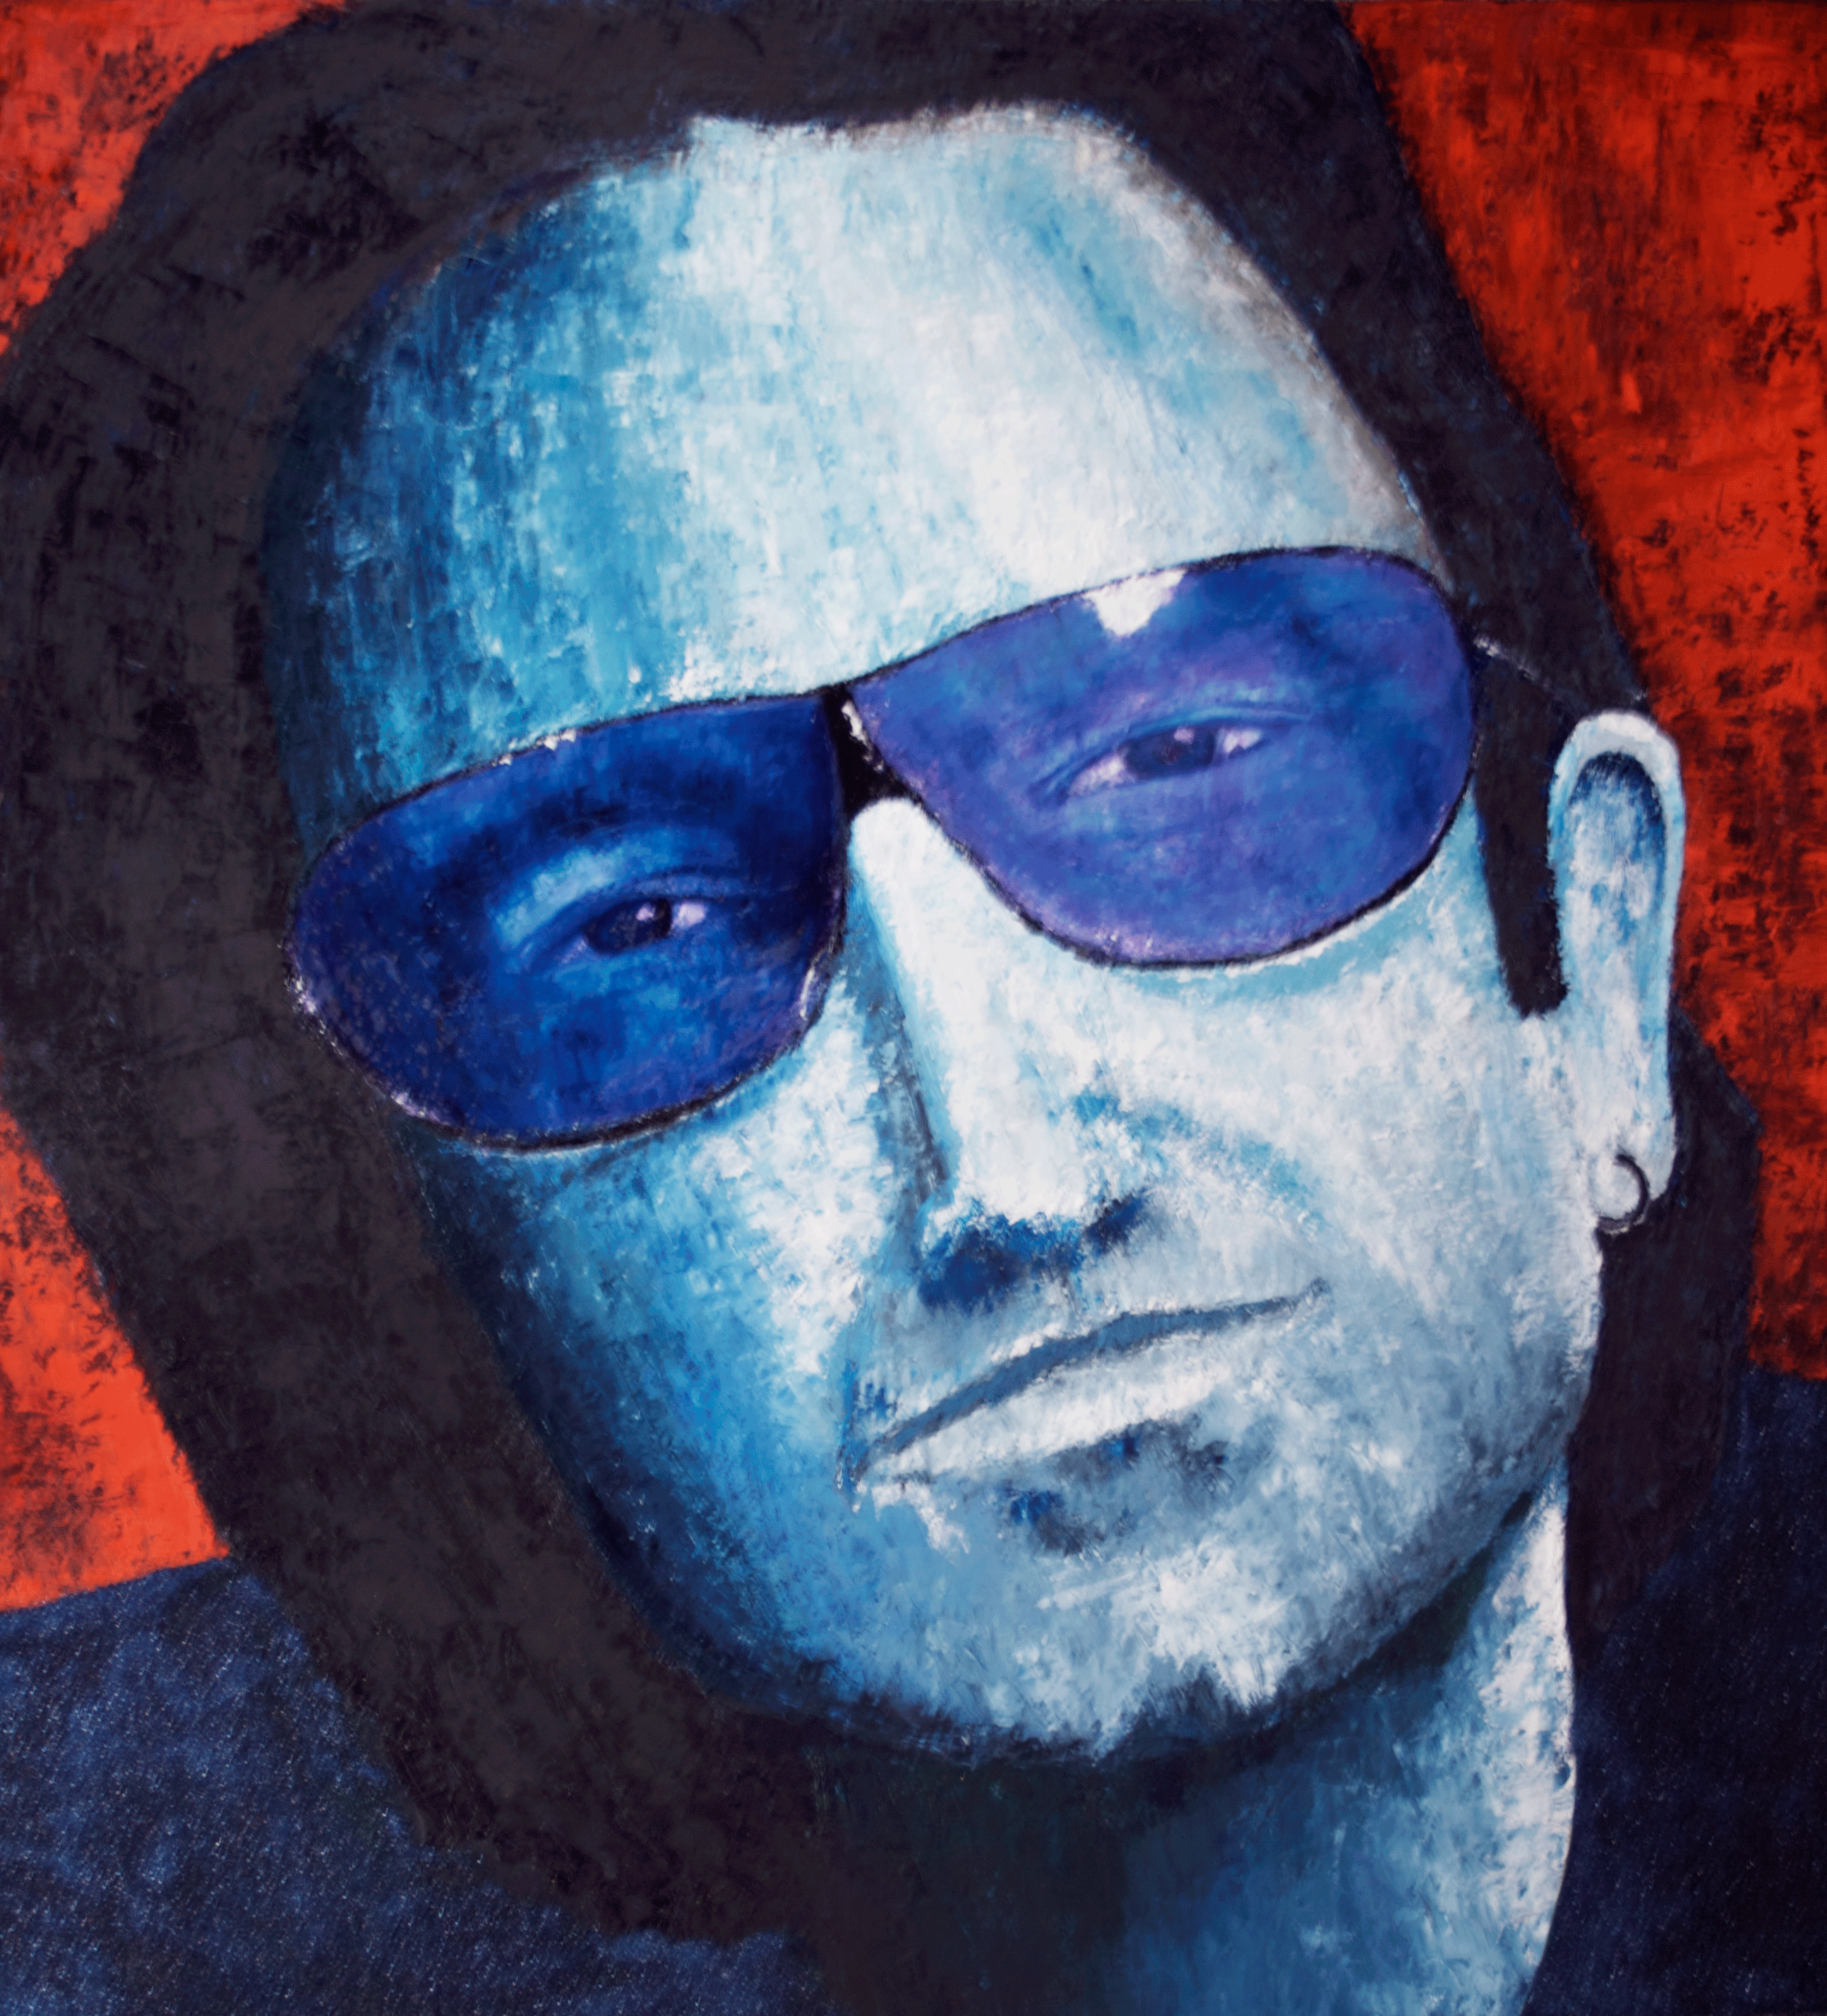 Bono_-_60x60_Mixed_Media_on_Canvas_by_Fine_Artist_Rene_Romero_Schuler_Reneschuler